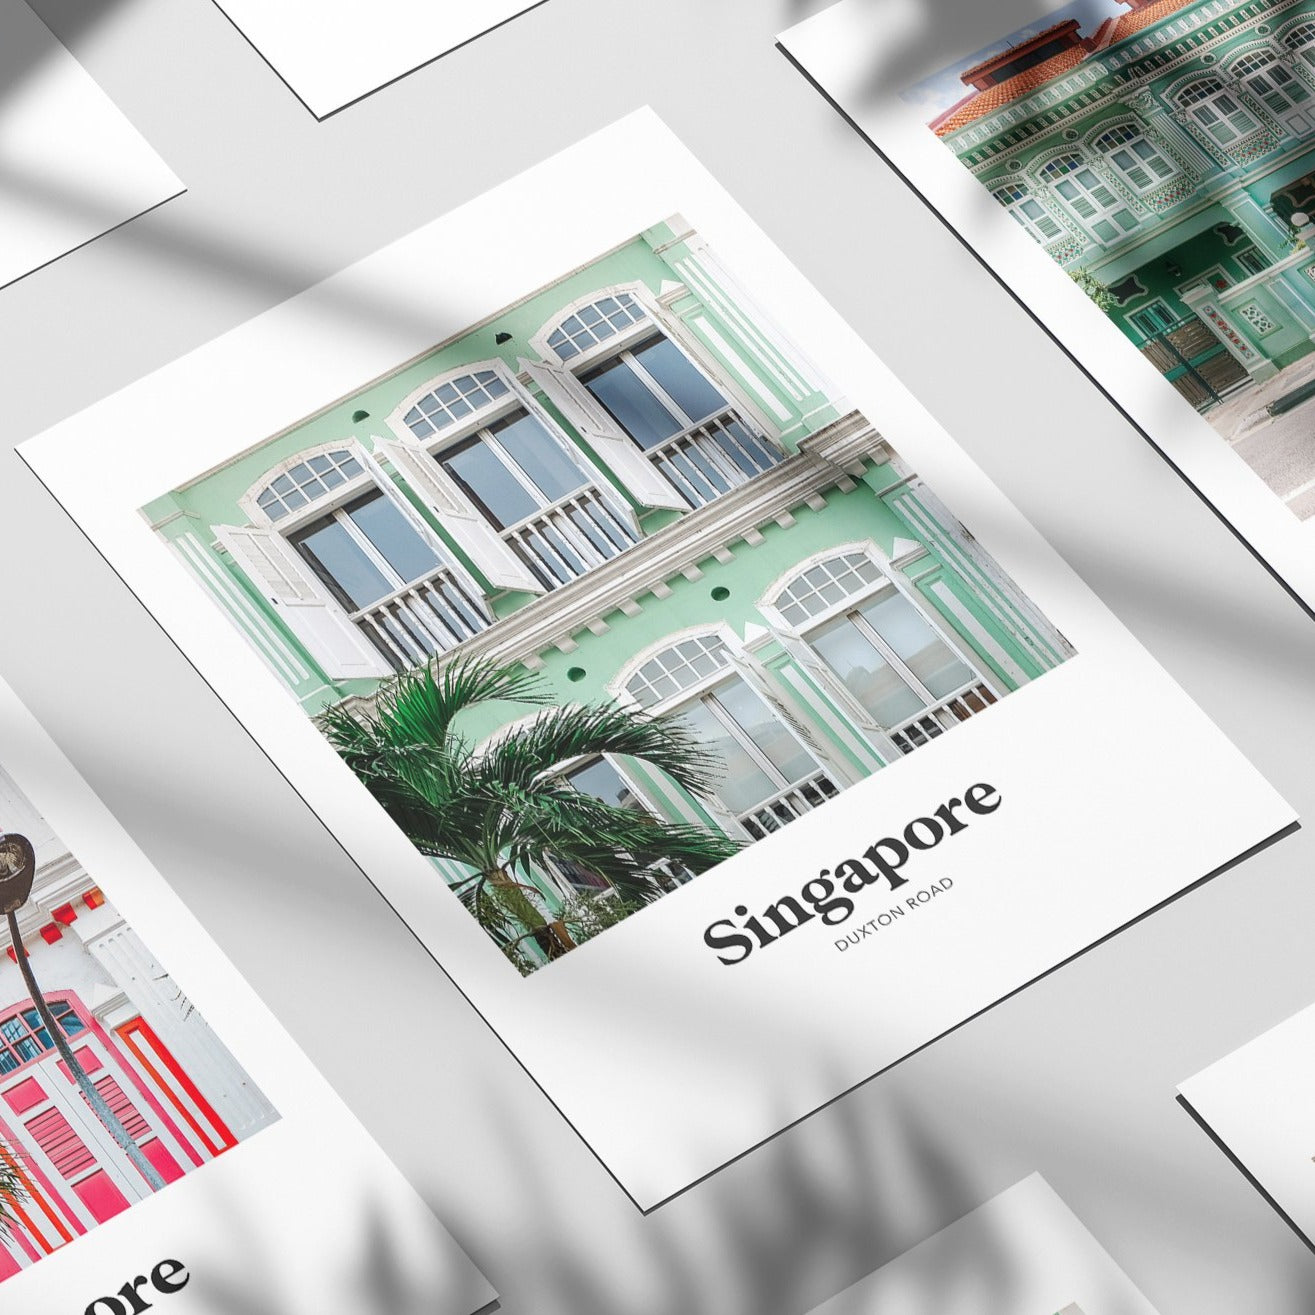 Singapore - Green Duxton Road Shophouse Print